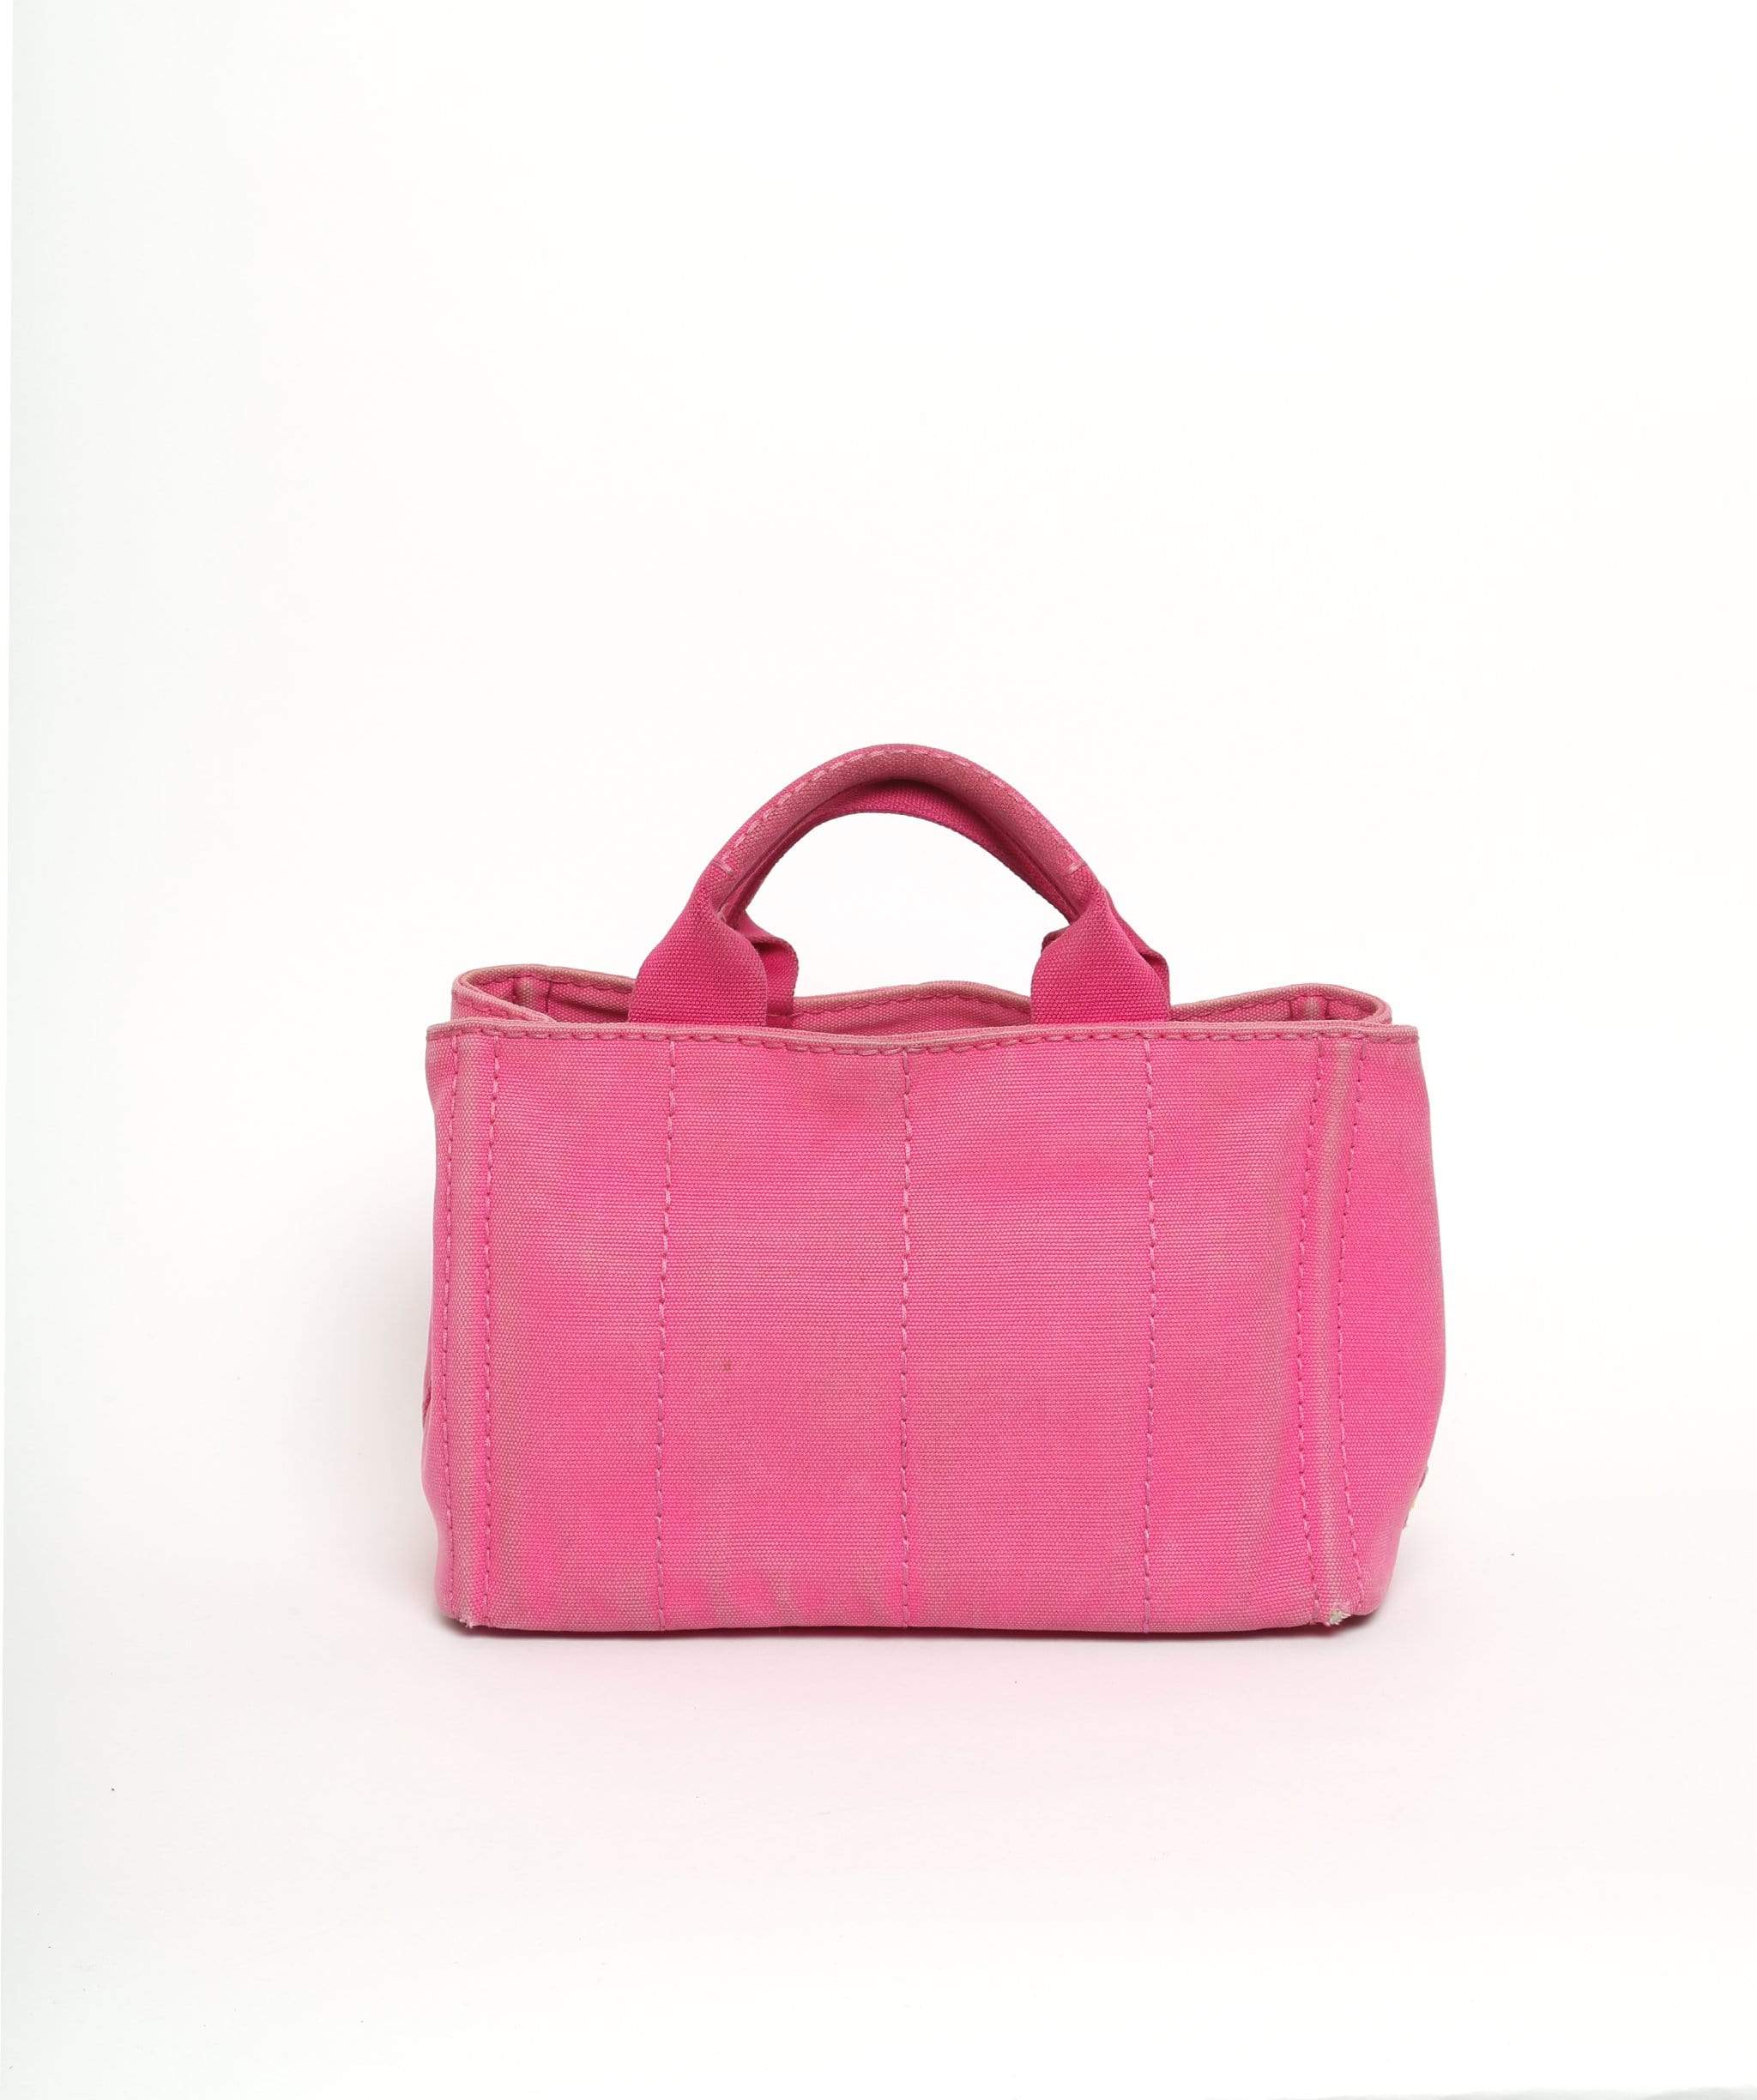 Prada PRADA Pink Canapa Canvas PM Hand Bag 58 with shoulder strap